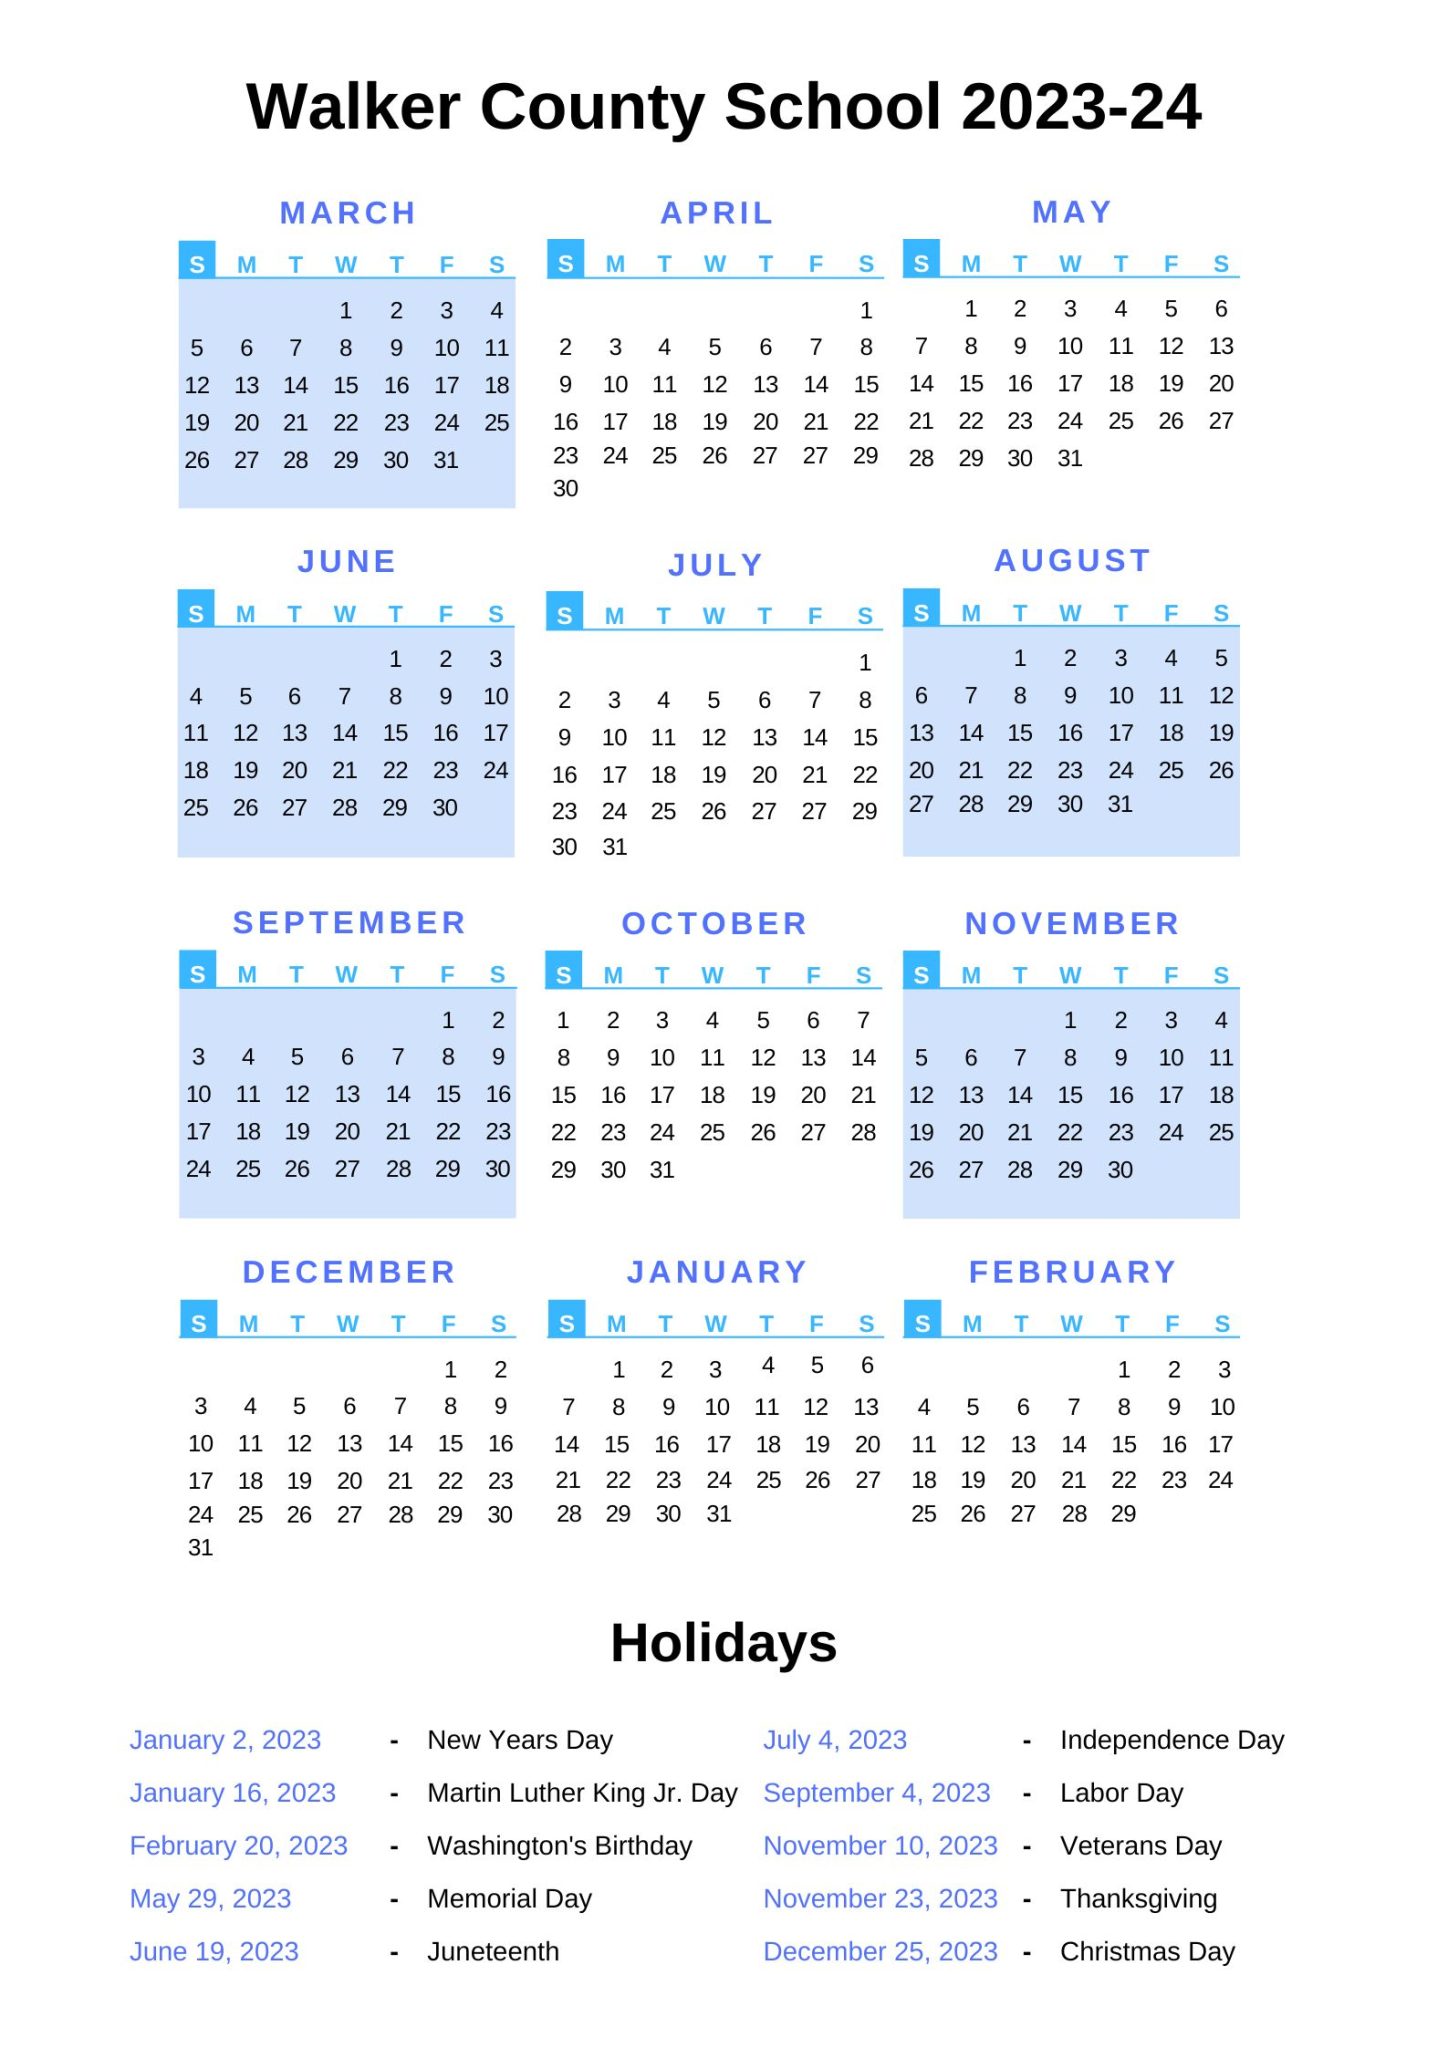 walker-county-schools-calendar-2023-24-with-holidays